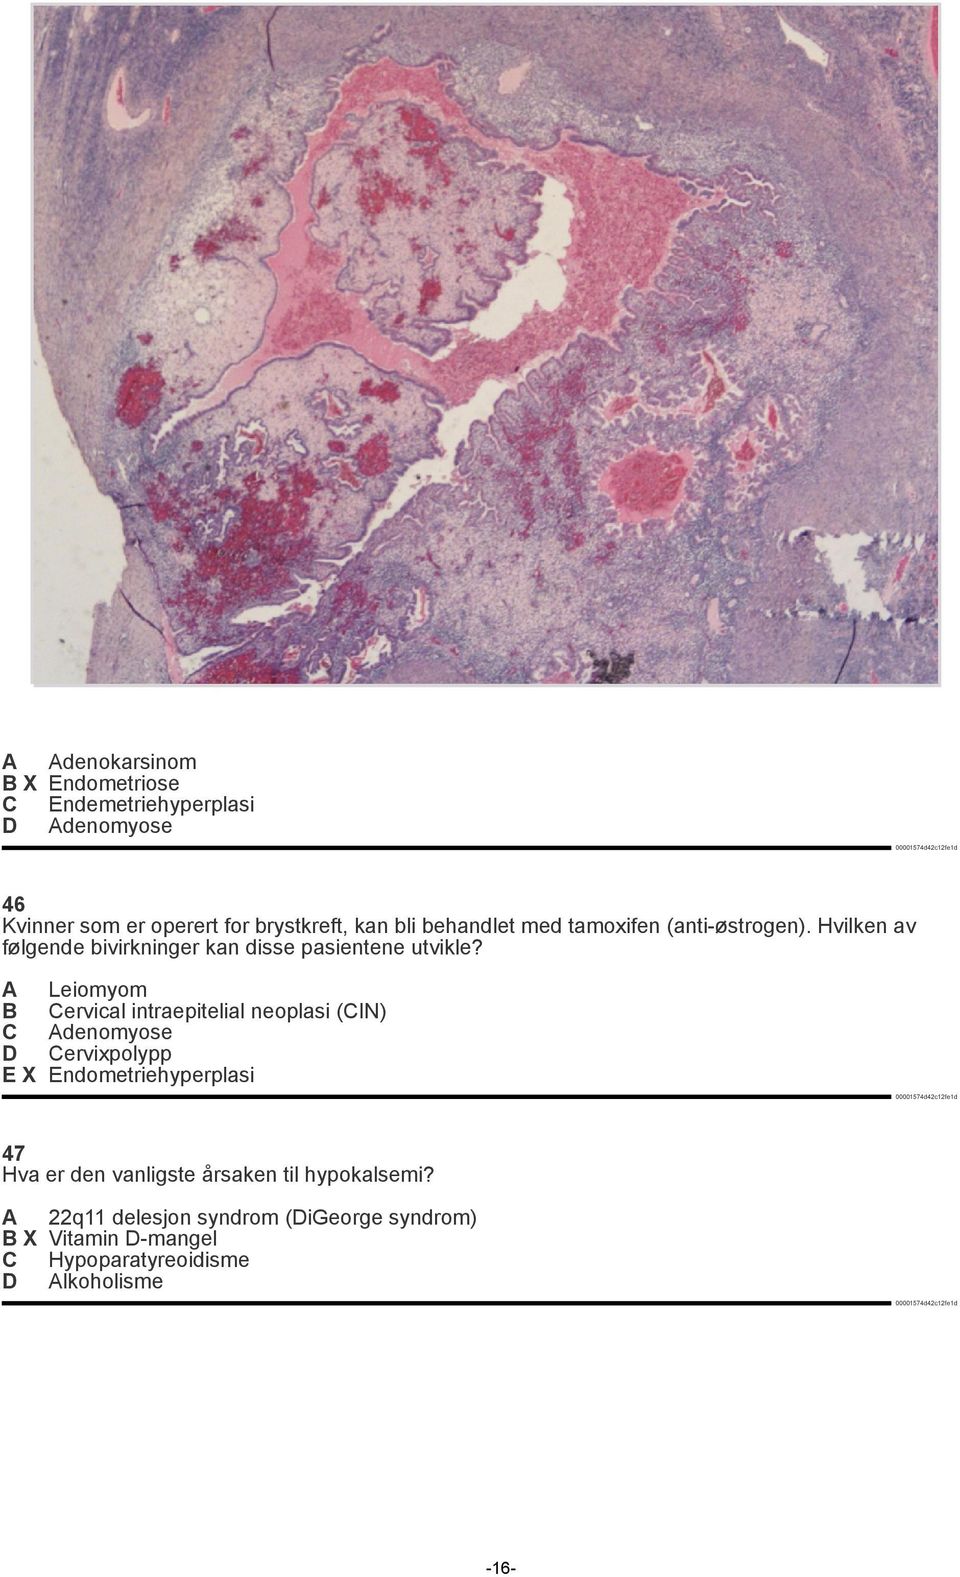 A Leiomyom B Cervical intraepitelial neoplasi (CIN) C Adenomyose D Cervixpolypp E X Endometriehyperplasi 47 Hva er den